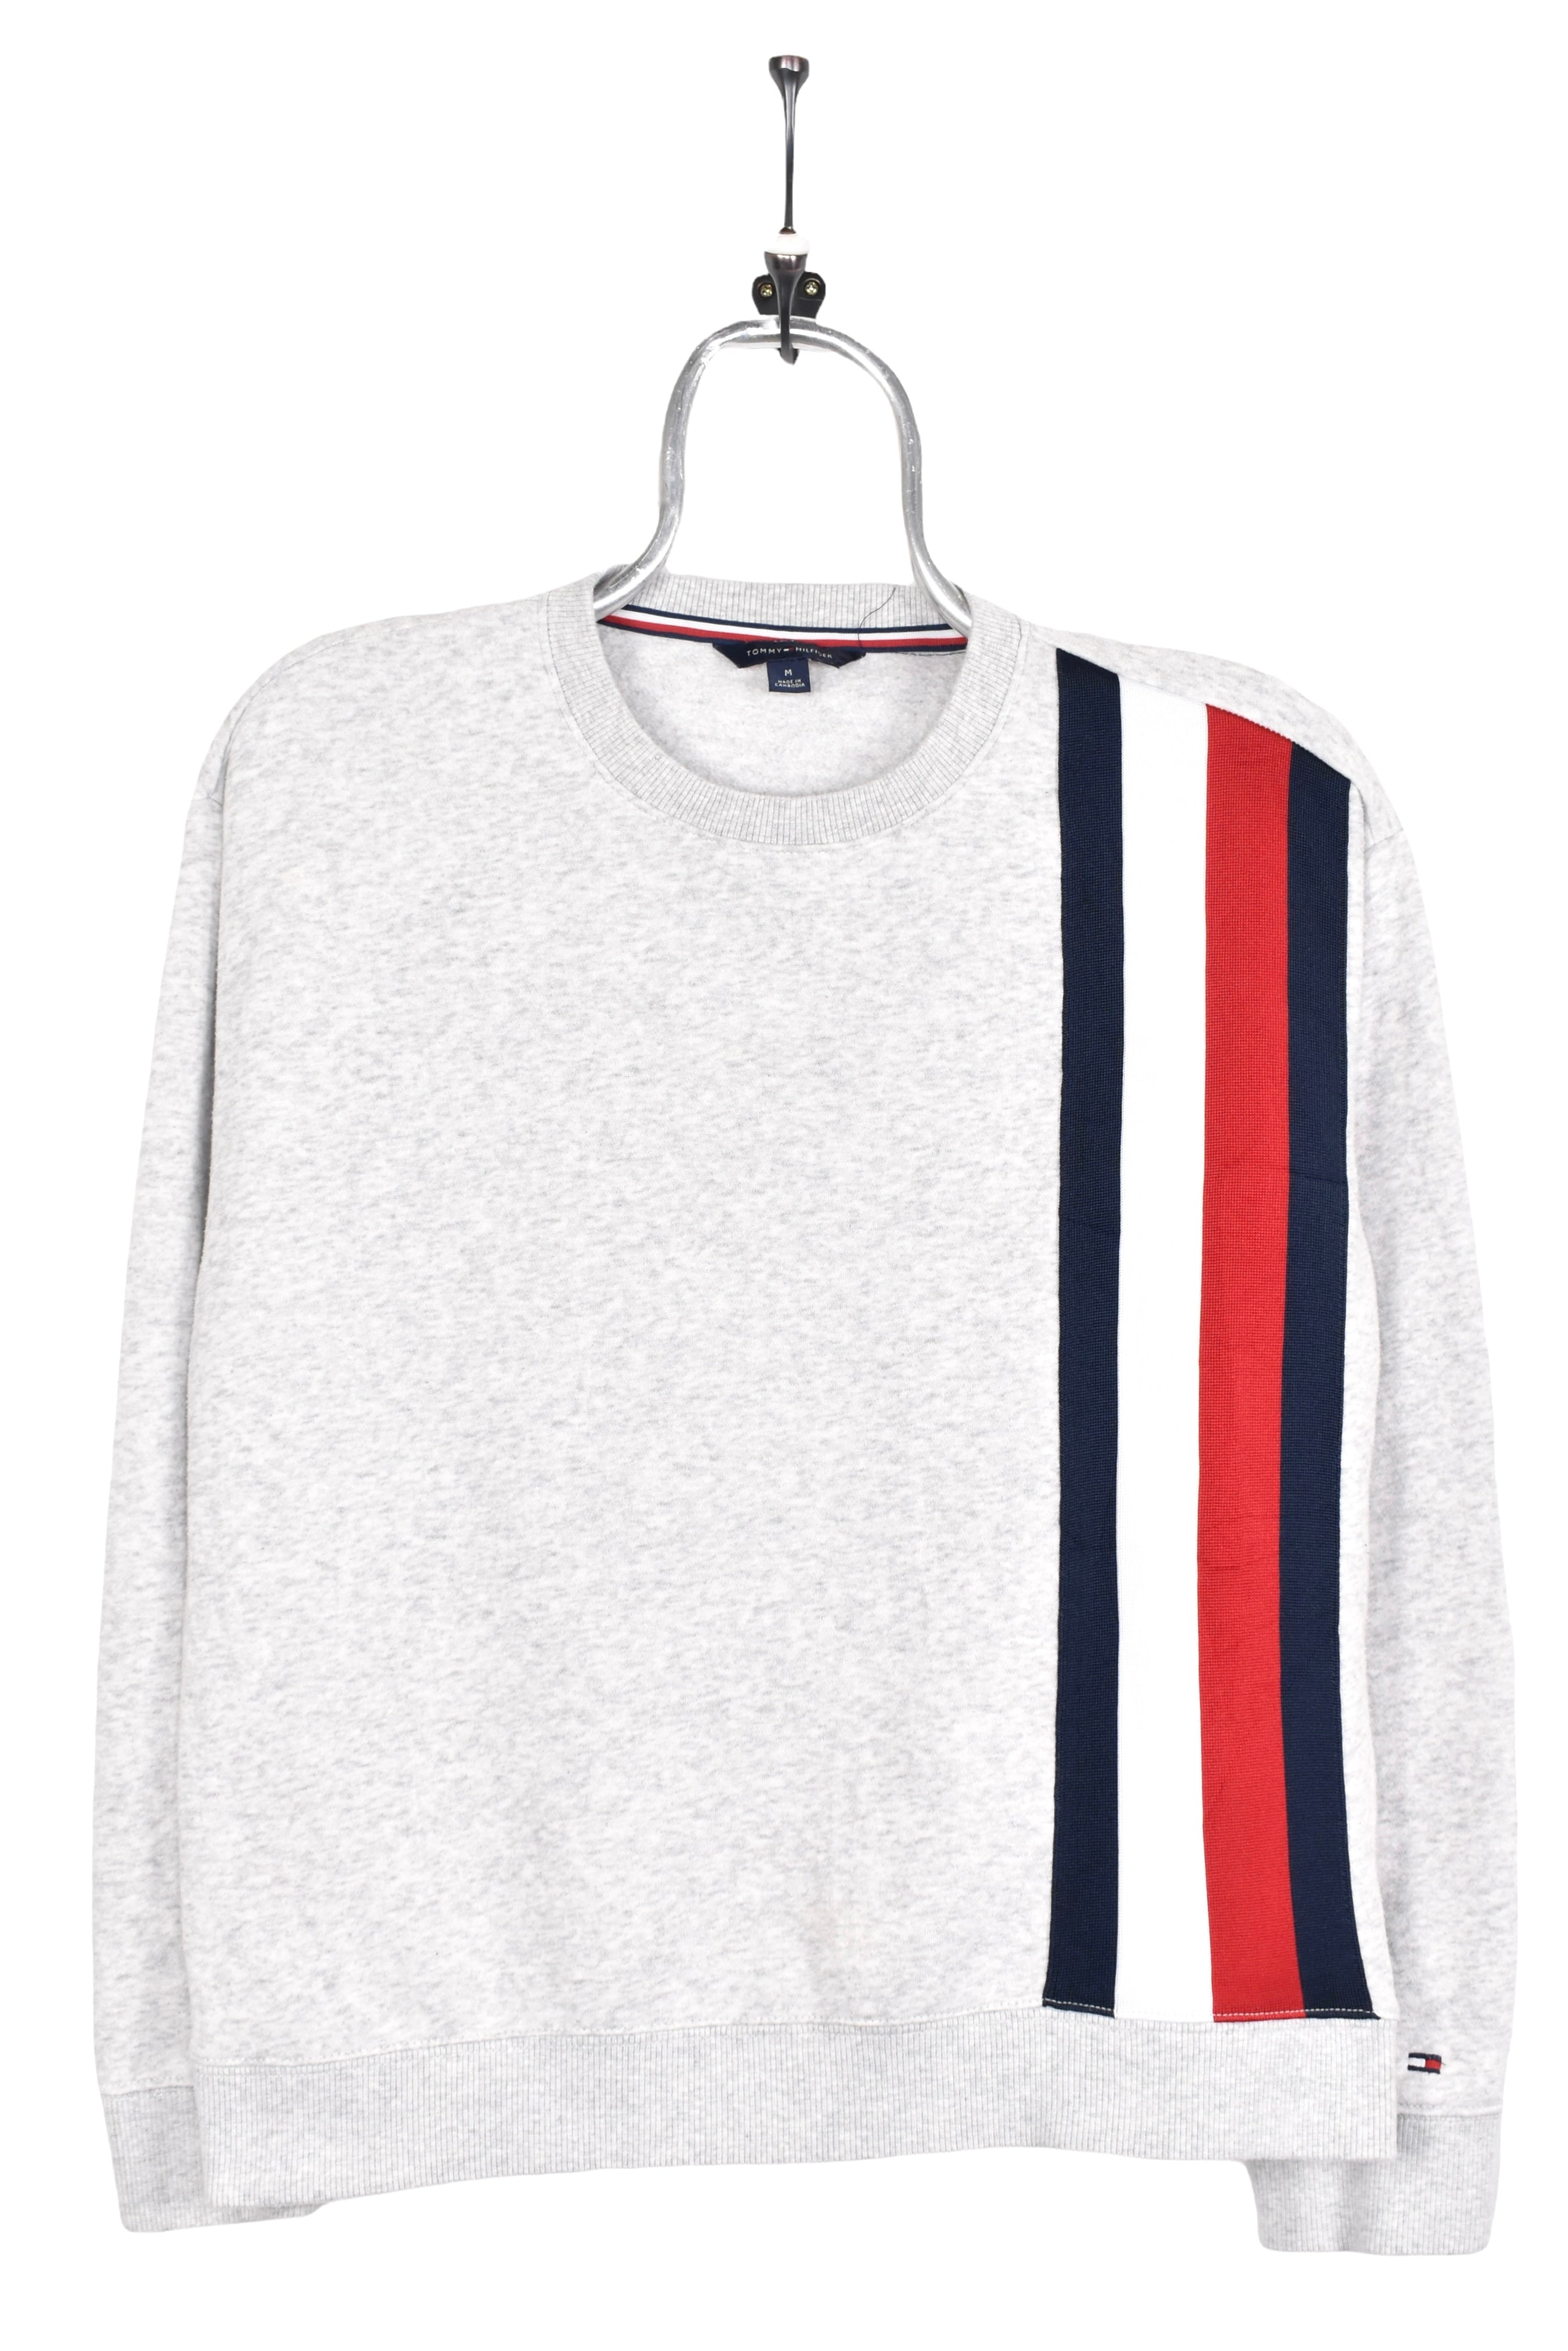 Women's vintage Tommy Hilfiger sweatshirt, grey striped crewneck - AU Medium TOMMY HILFIGER